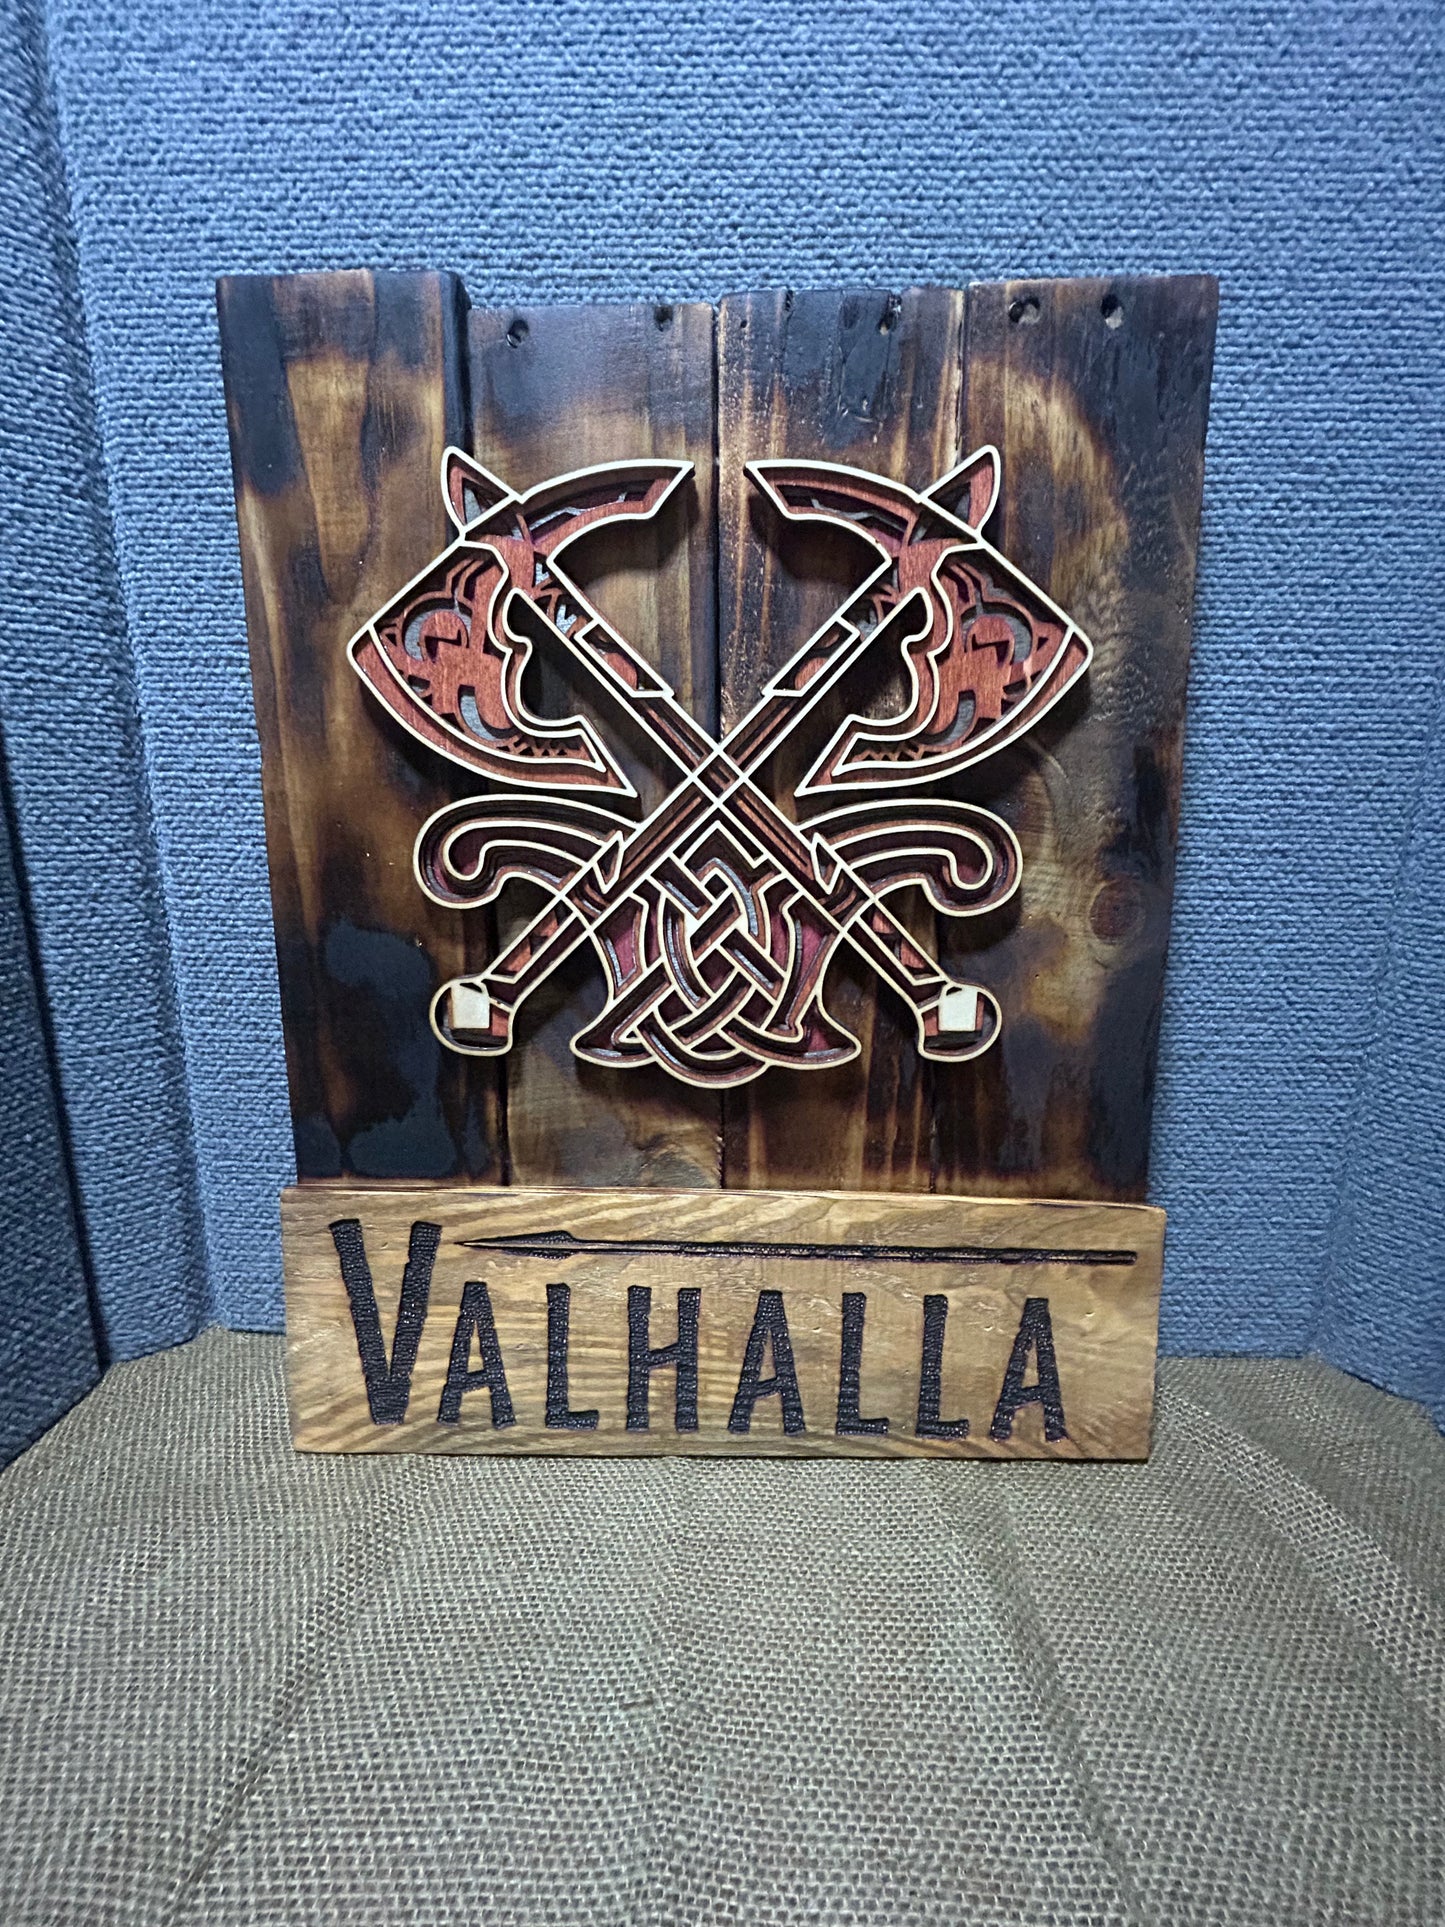 Axes of Valhalla